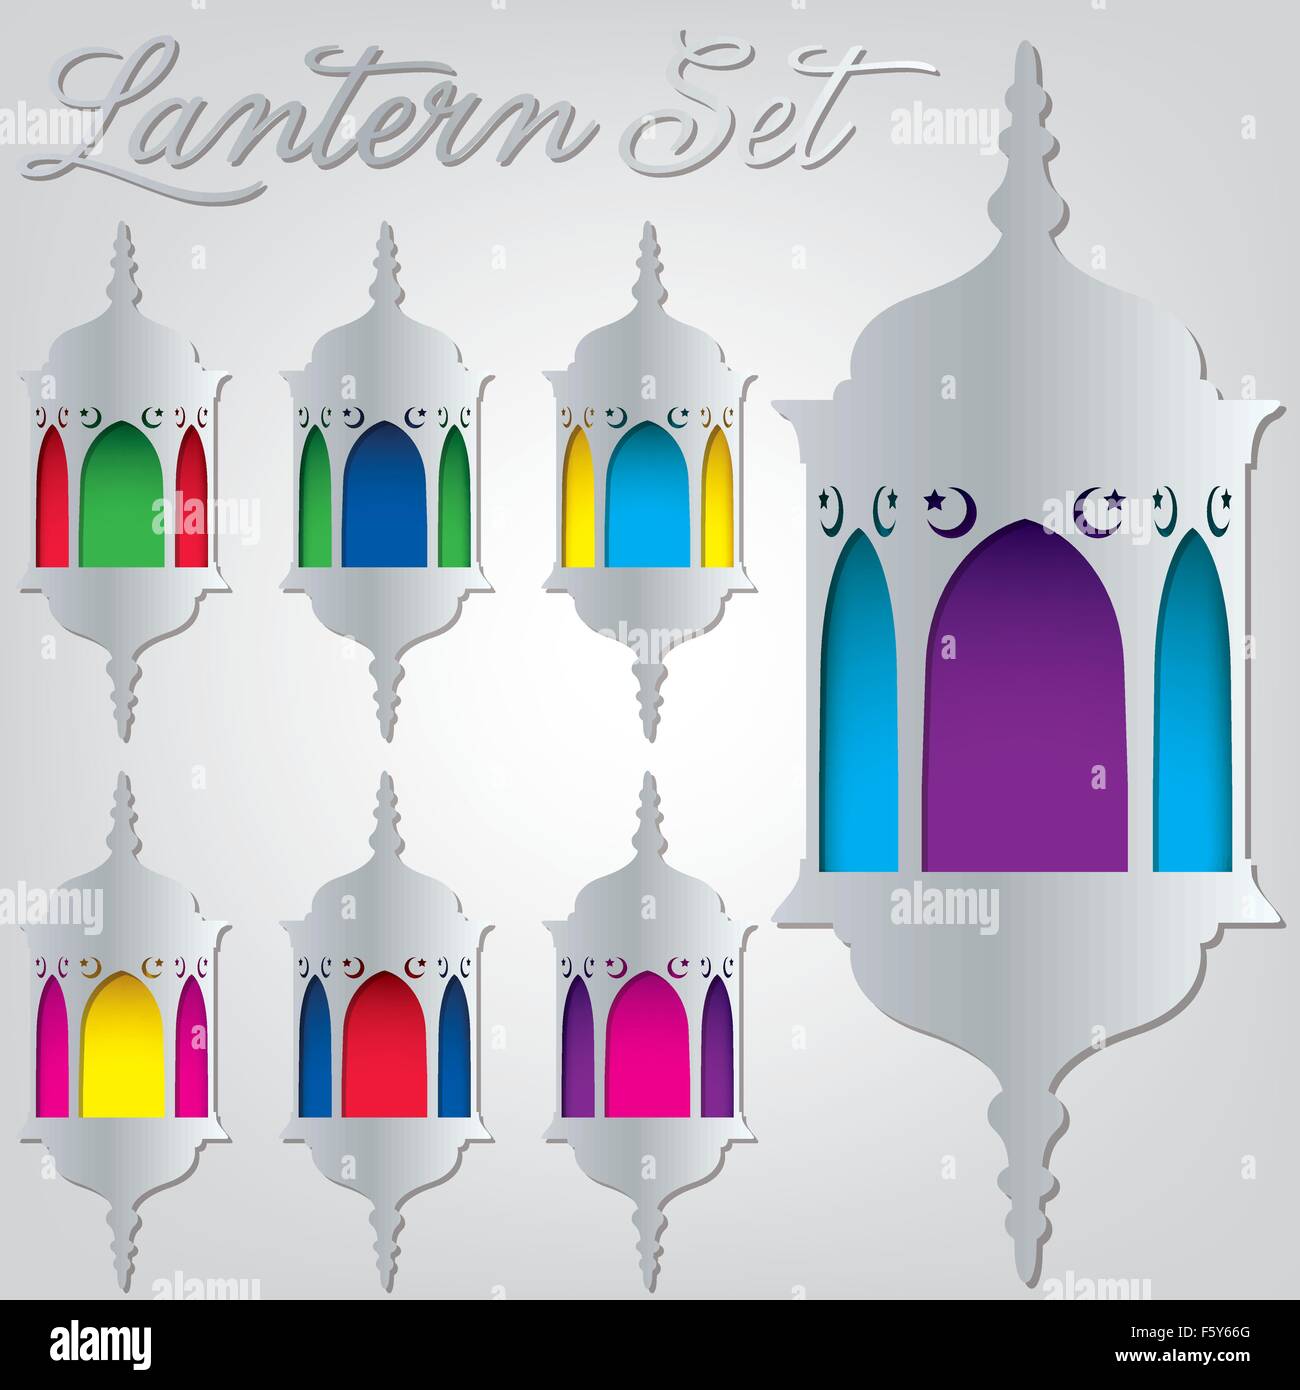 Arabic lantern set in vector format. Stock Vector